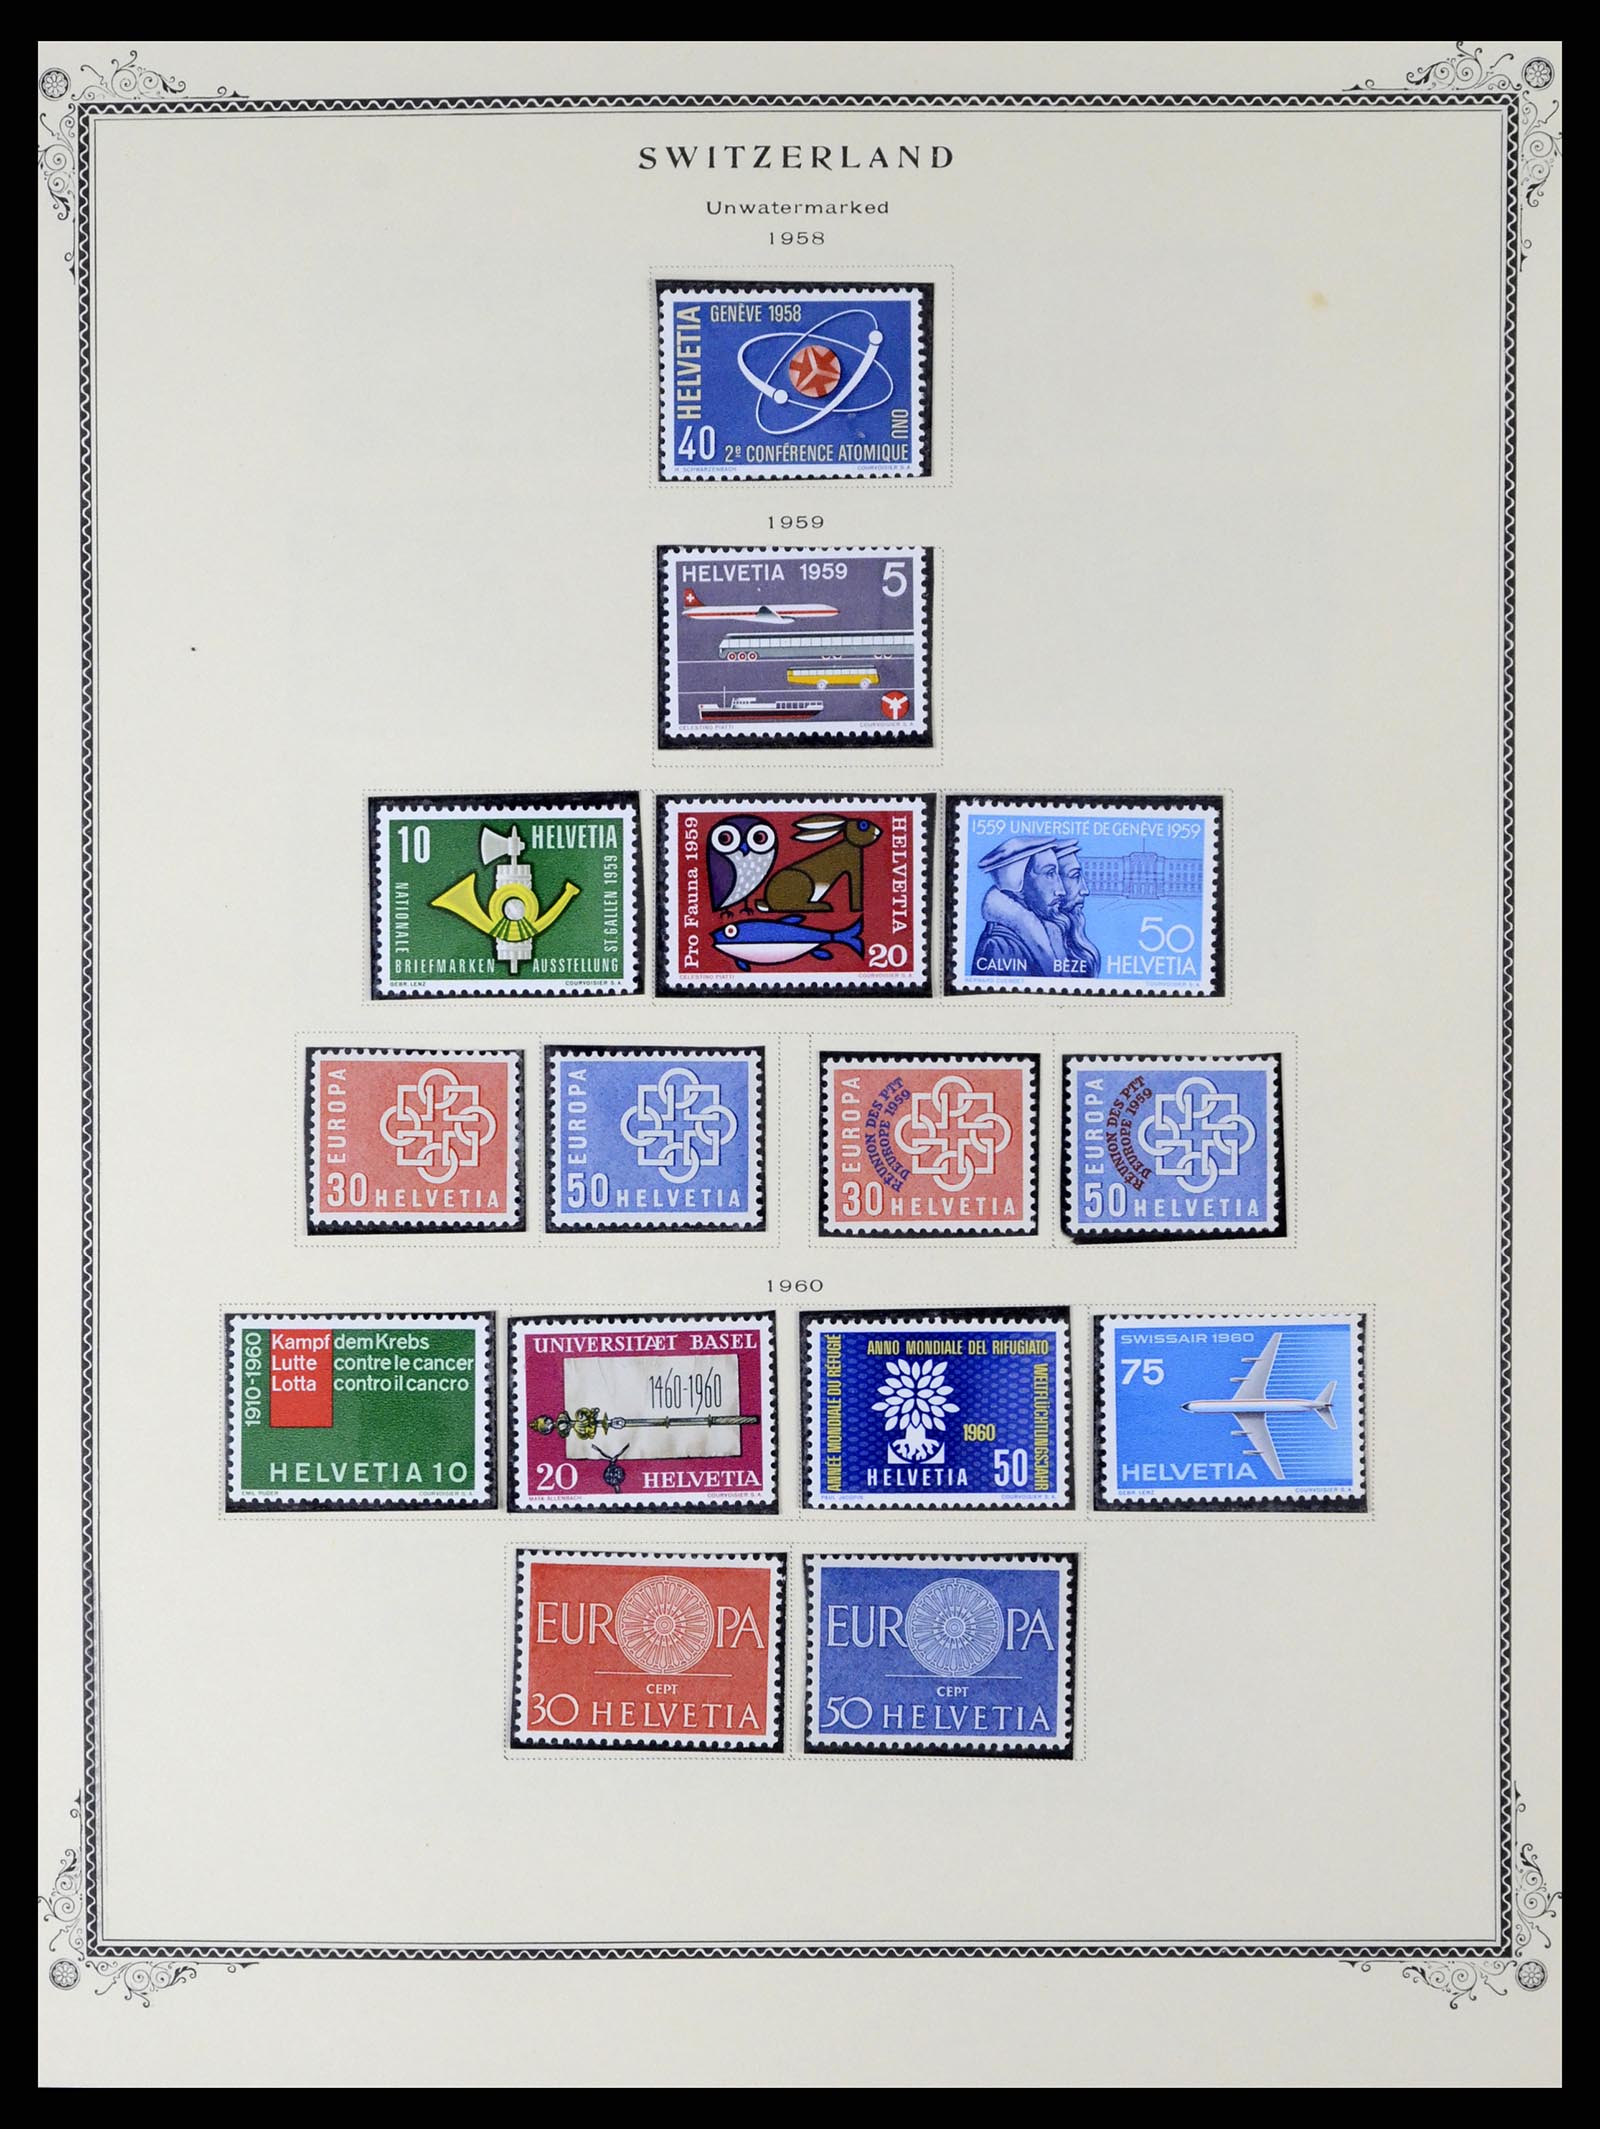 37641 020 - Stamp collection 37641 Switzerland 1855-1984.